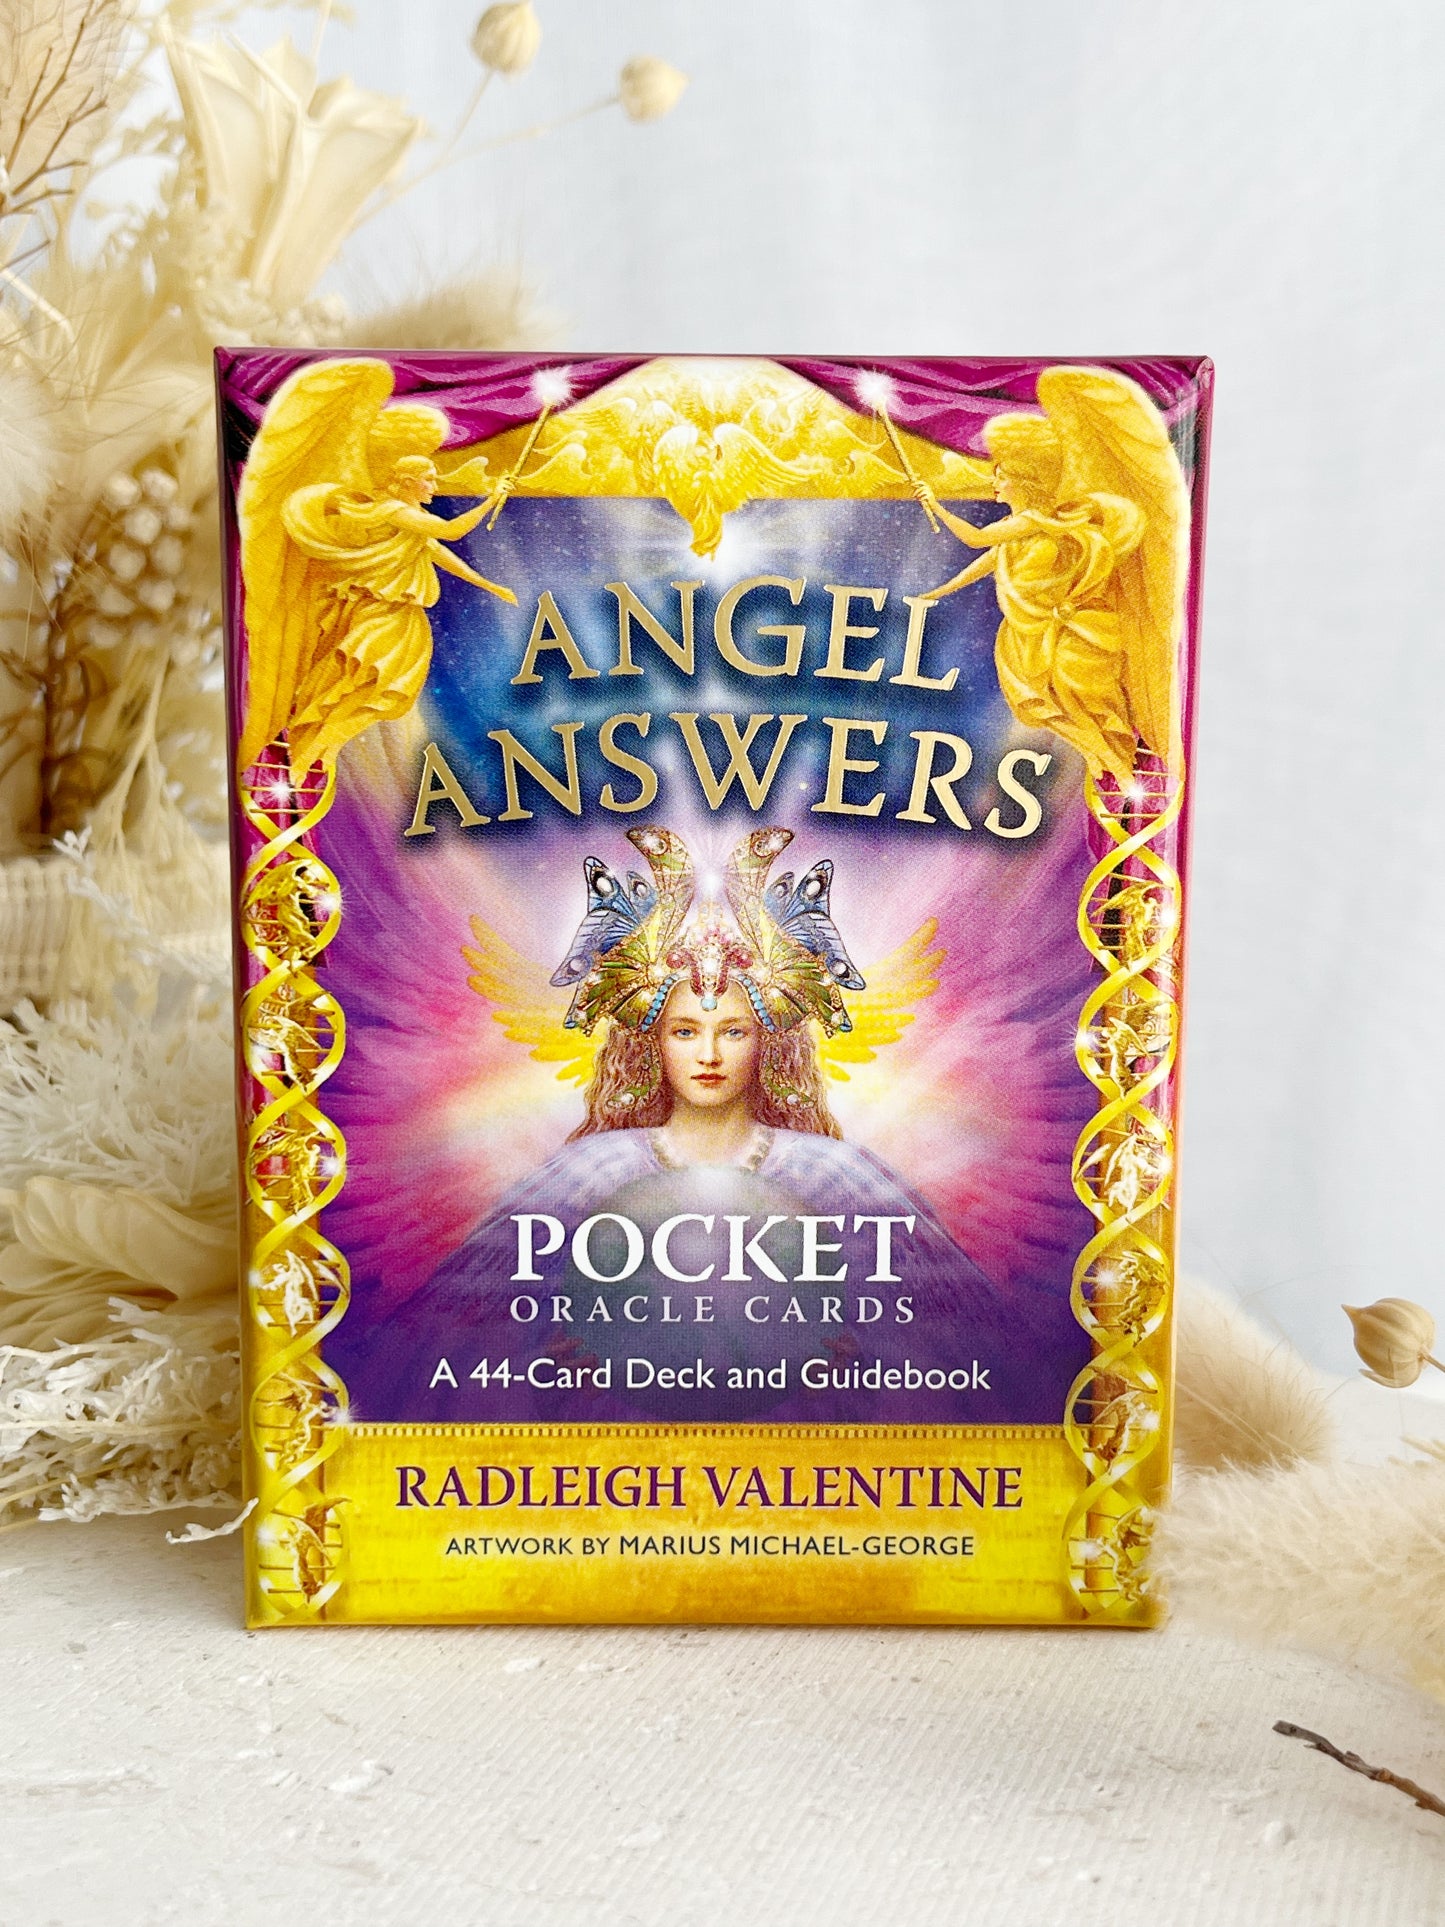  ANGEL ANSWERS, POCKET ORACLE, RADLEIGH VALENTINE, MARIUS MICHAEL-GEORGE